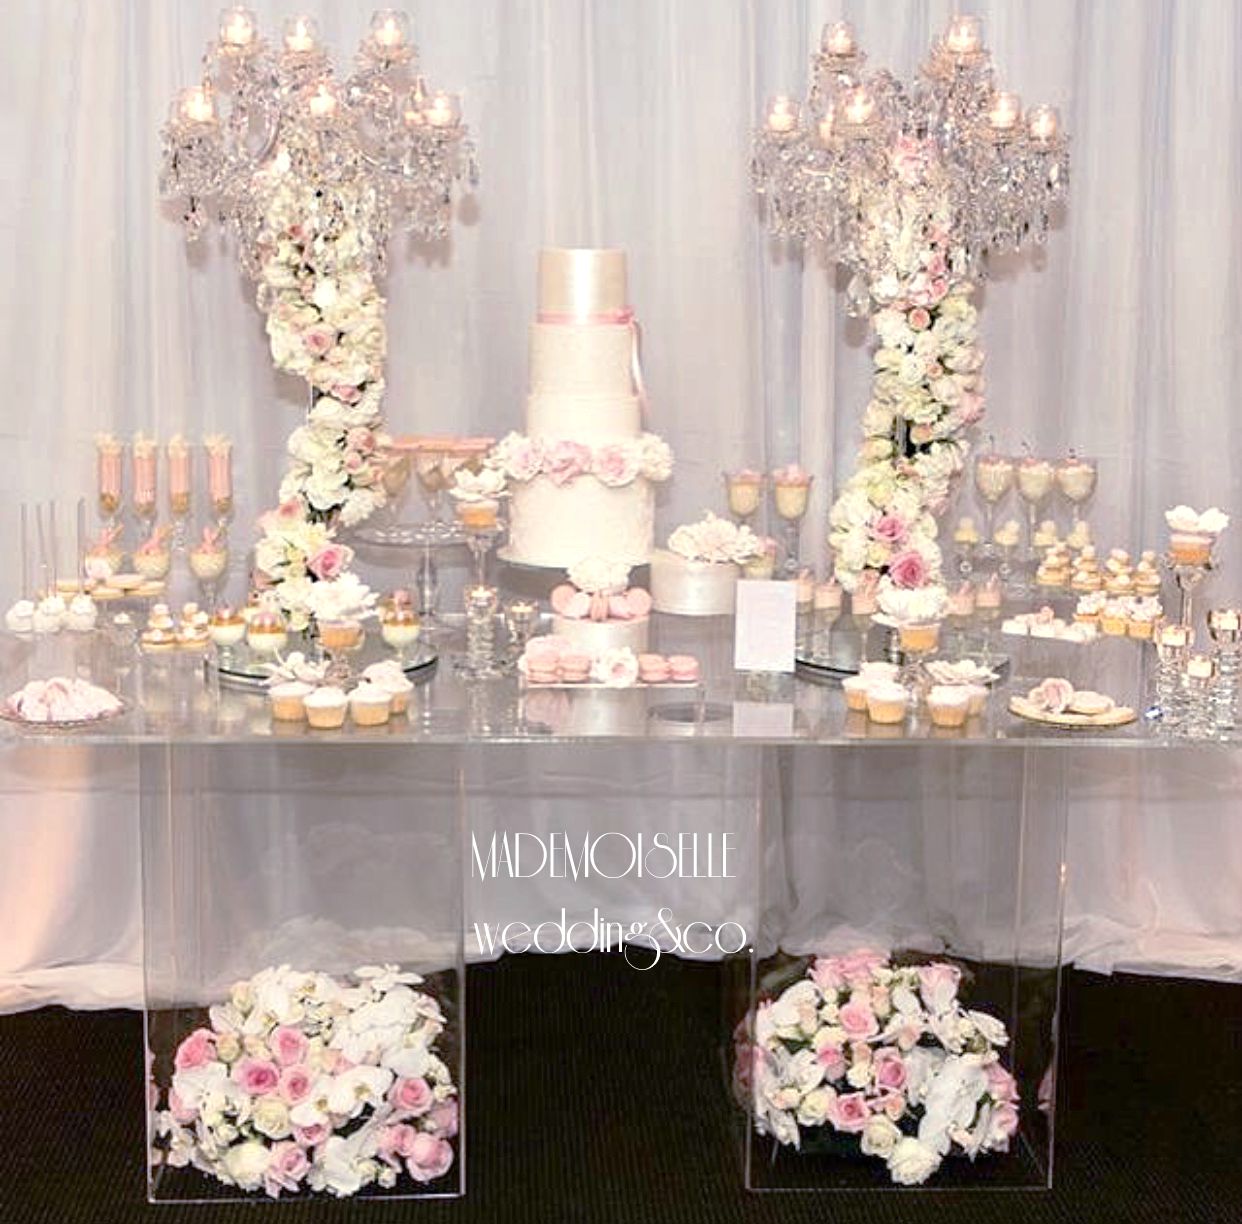 IMG_E4270-slatki sto-dekoracija slatkog stola-cupecakes-kolacici za slatki sto-dekoracija rodjendana-dekoracija vencanja-providni sto